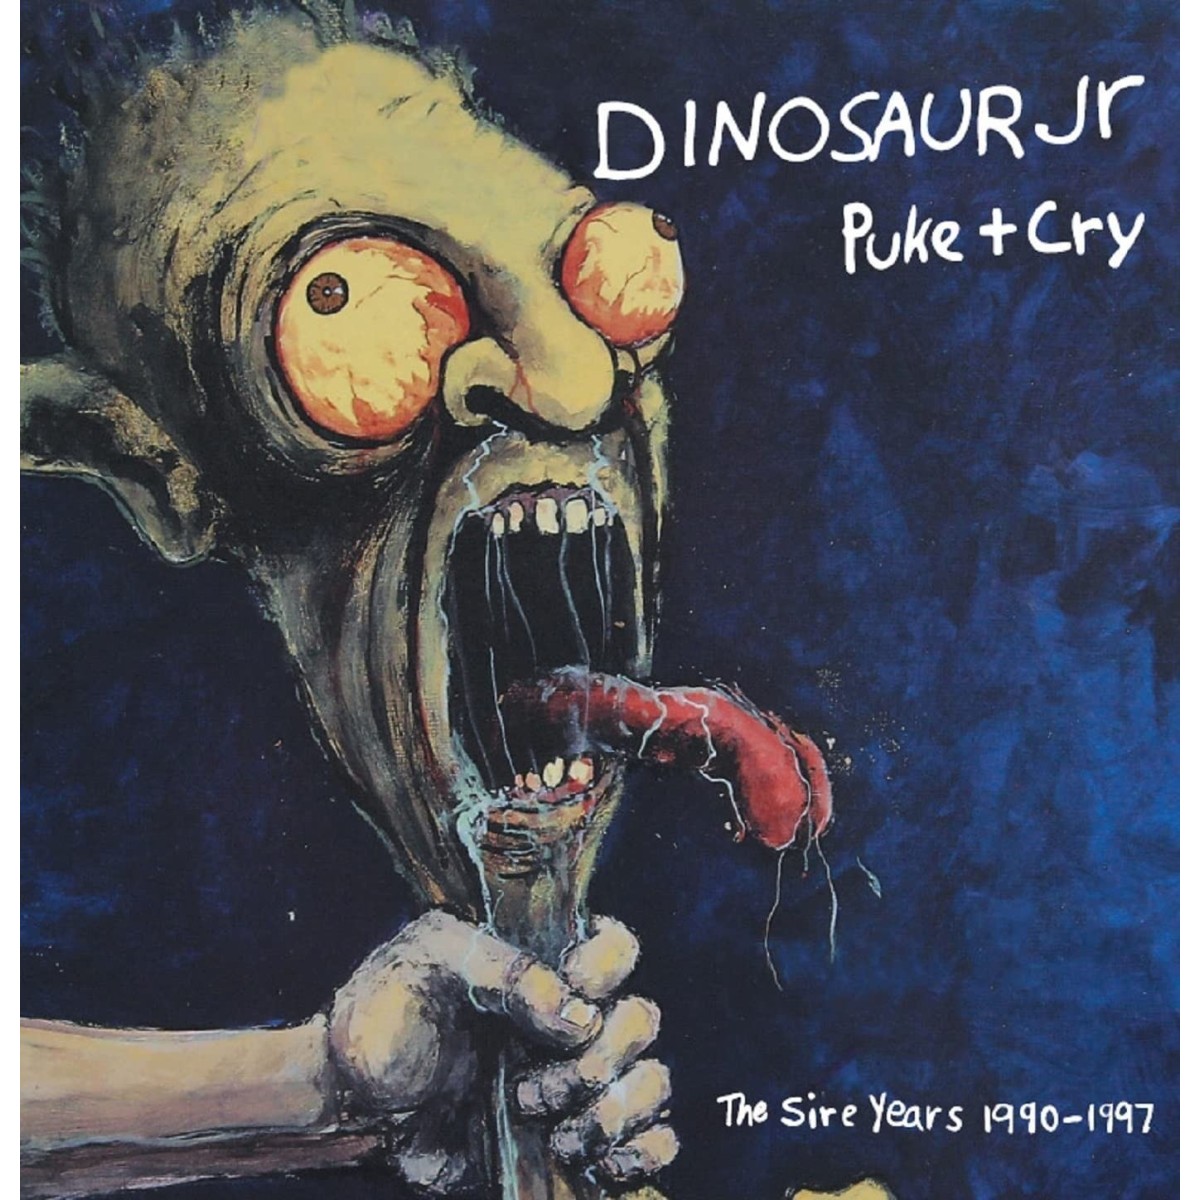 Dinosaur Jr. - Puke + Cry: The Sire Years 1990-1997